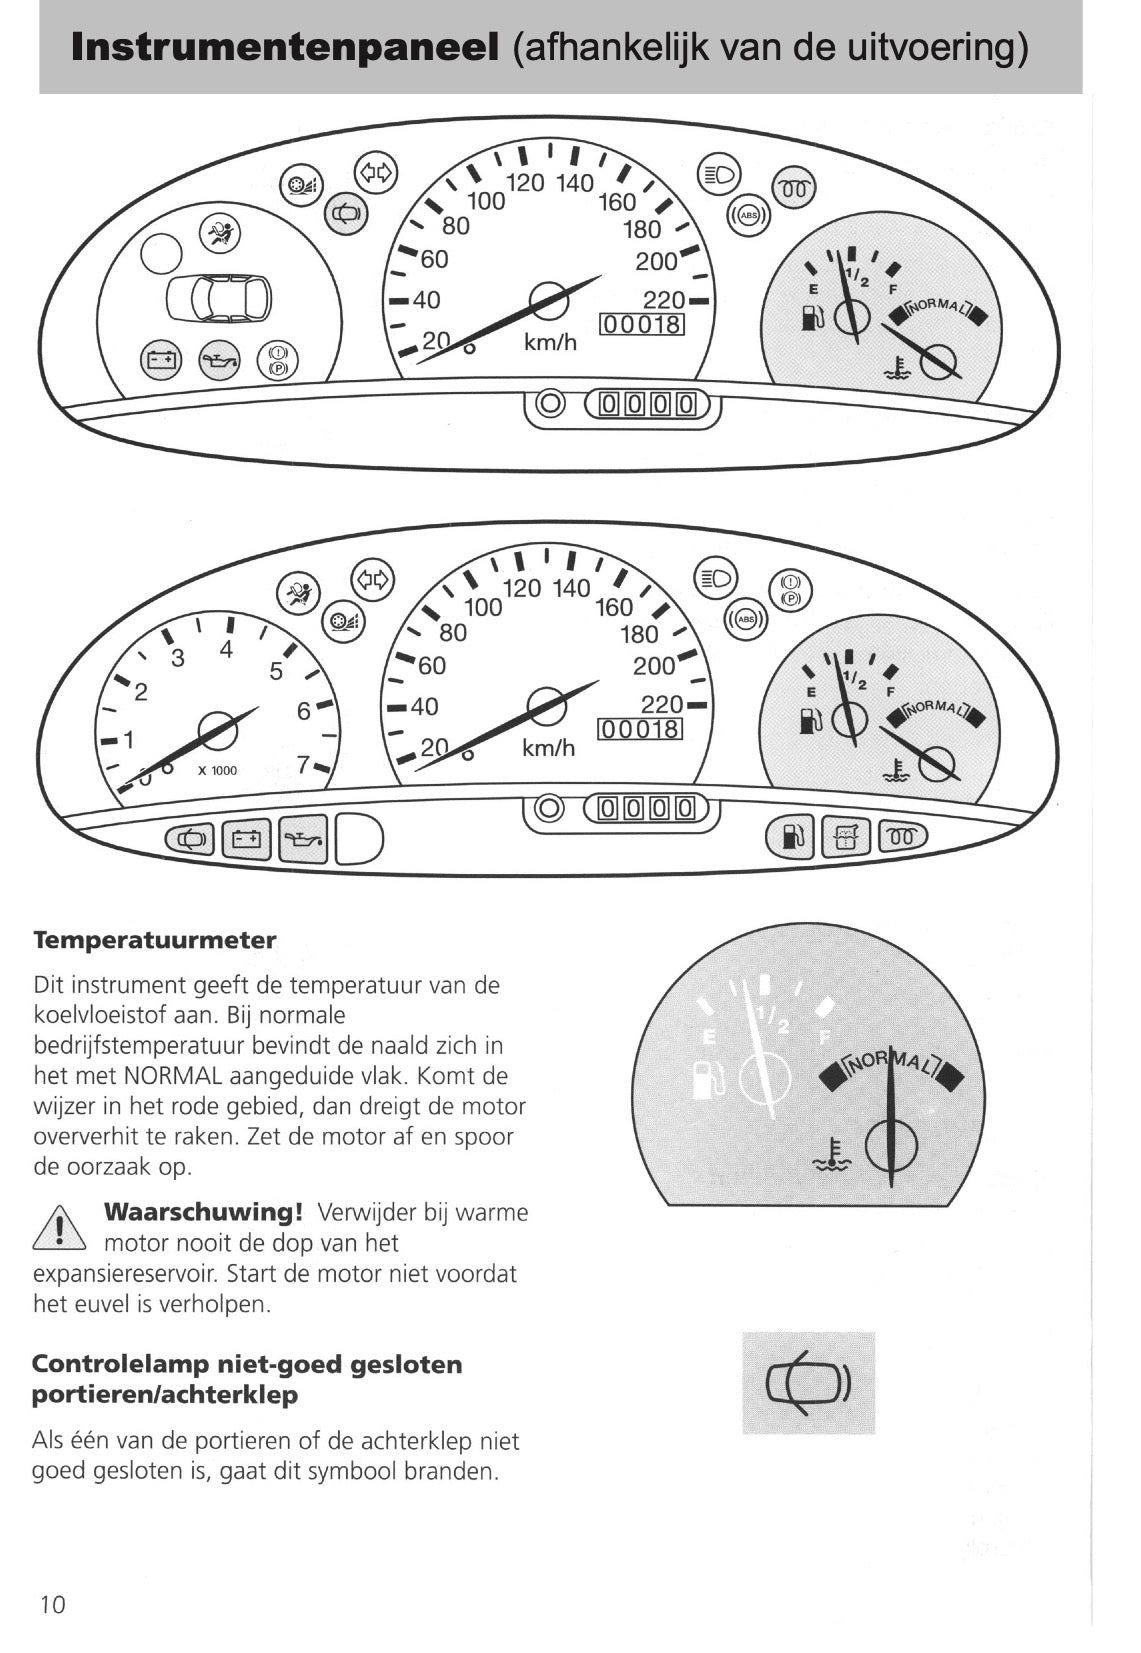 1995-1999 Ford Fiesta Owner's Manual | Dutch